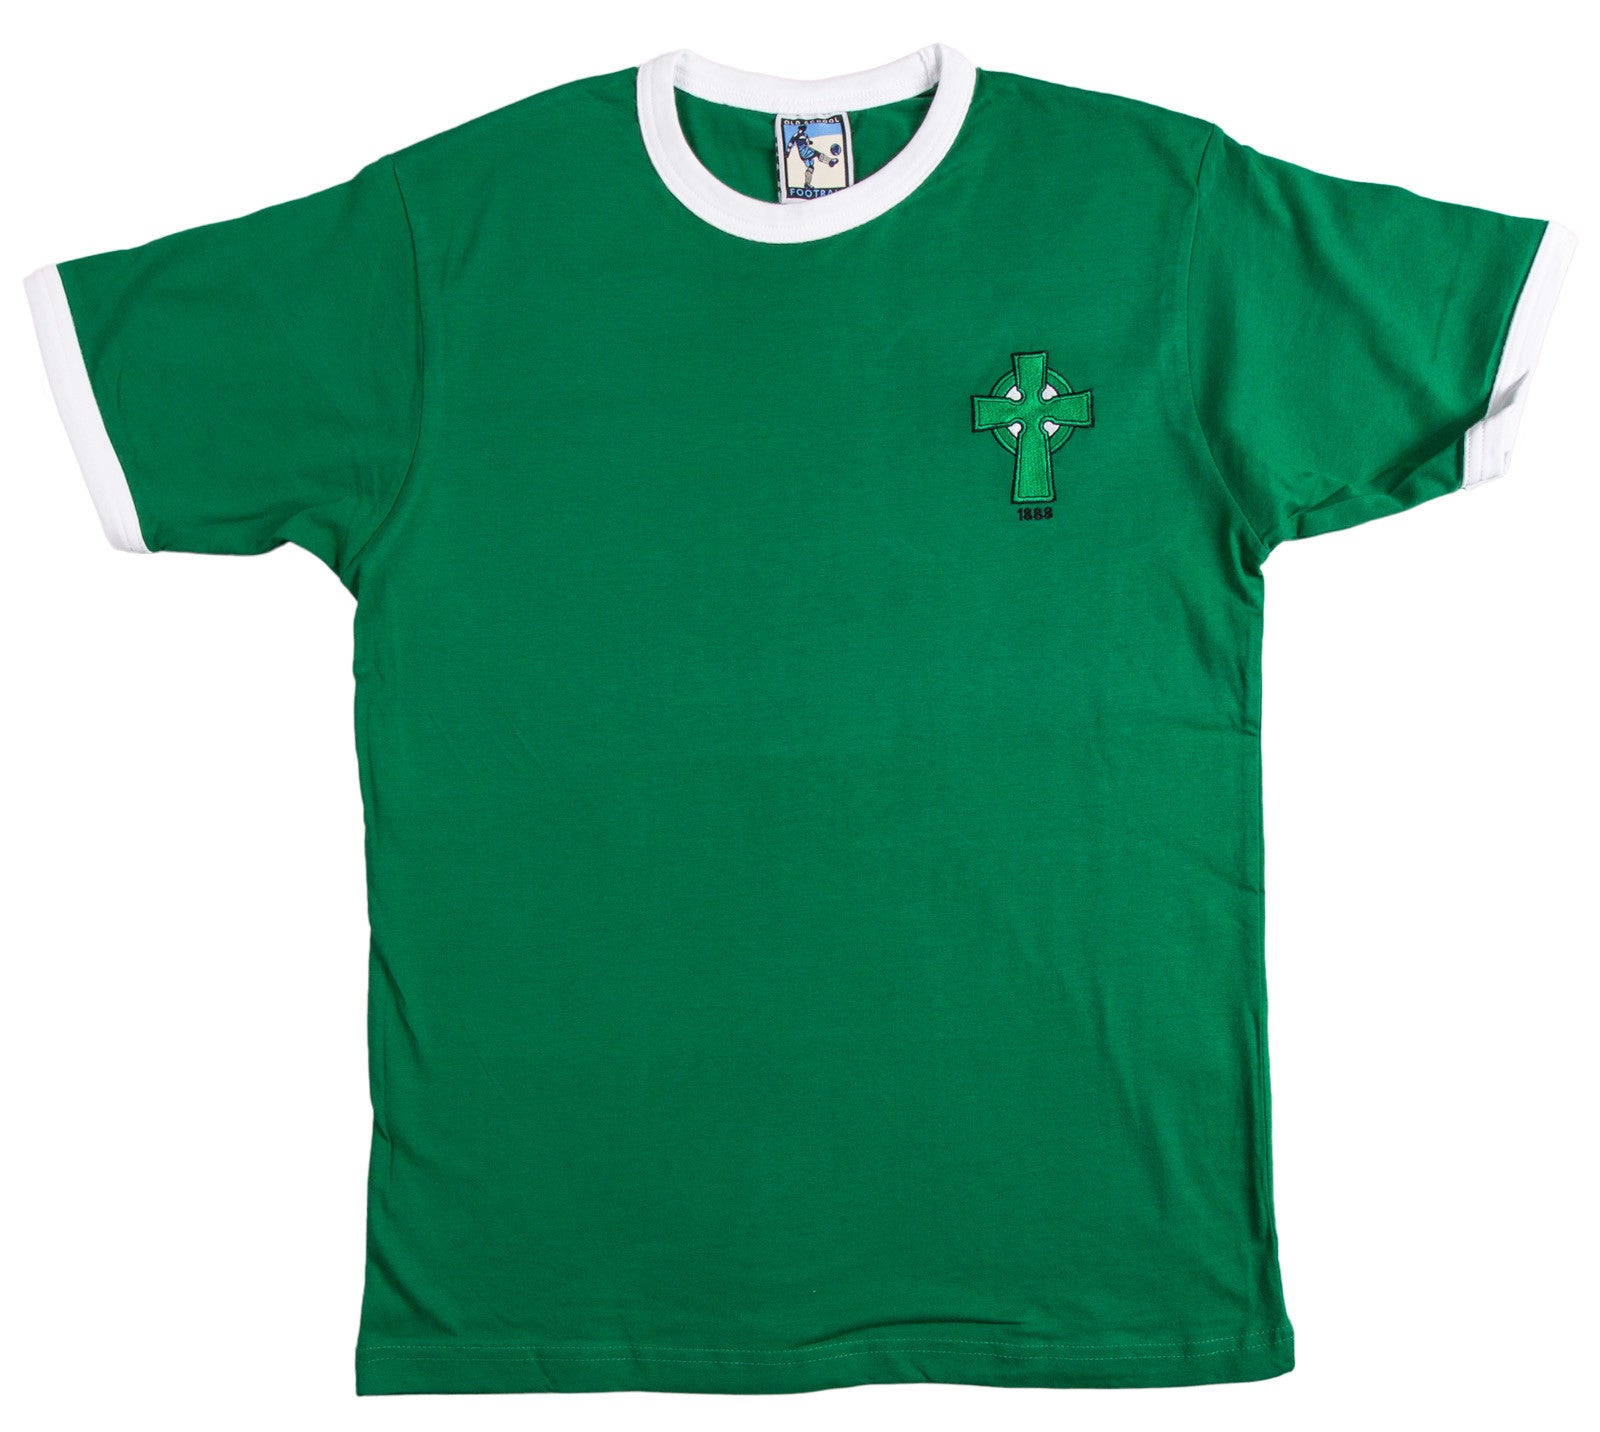 Celtic Retro Football T Shirt 1888 - Old School Football